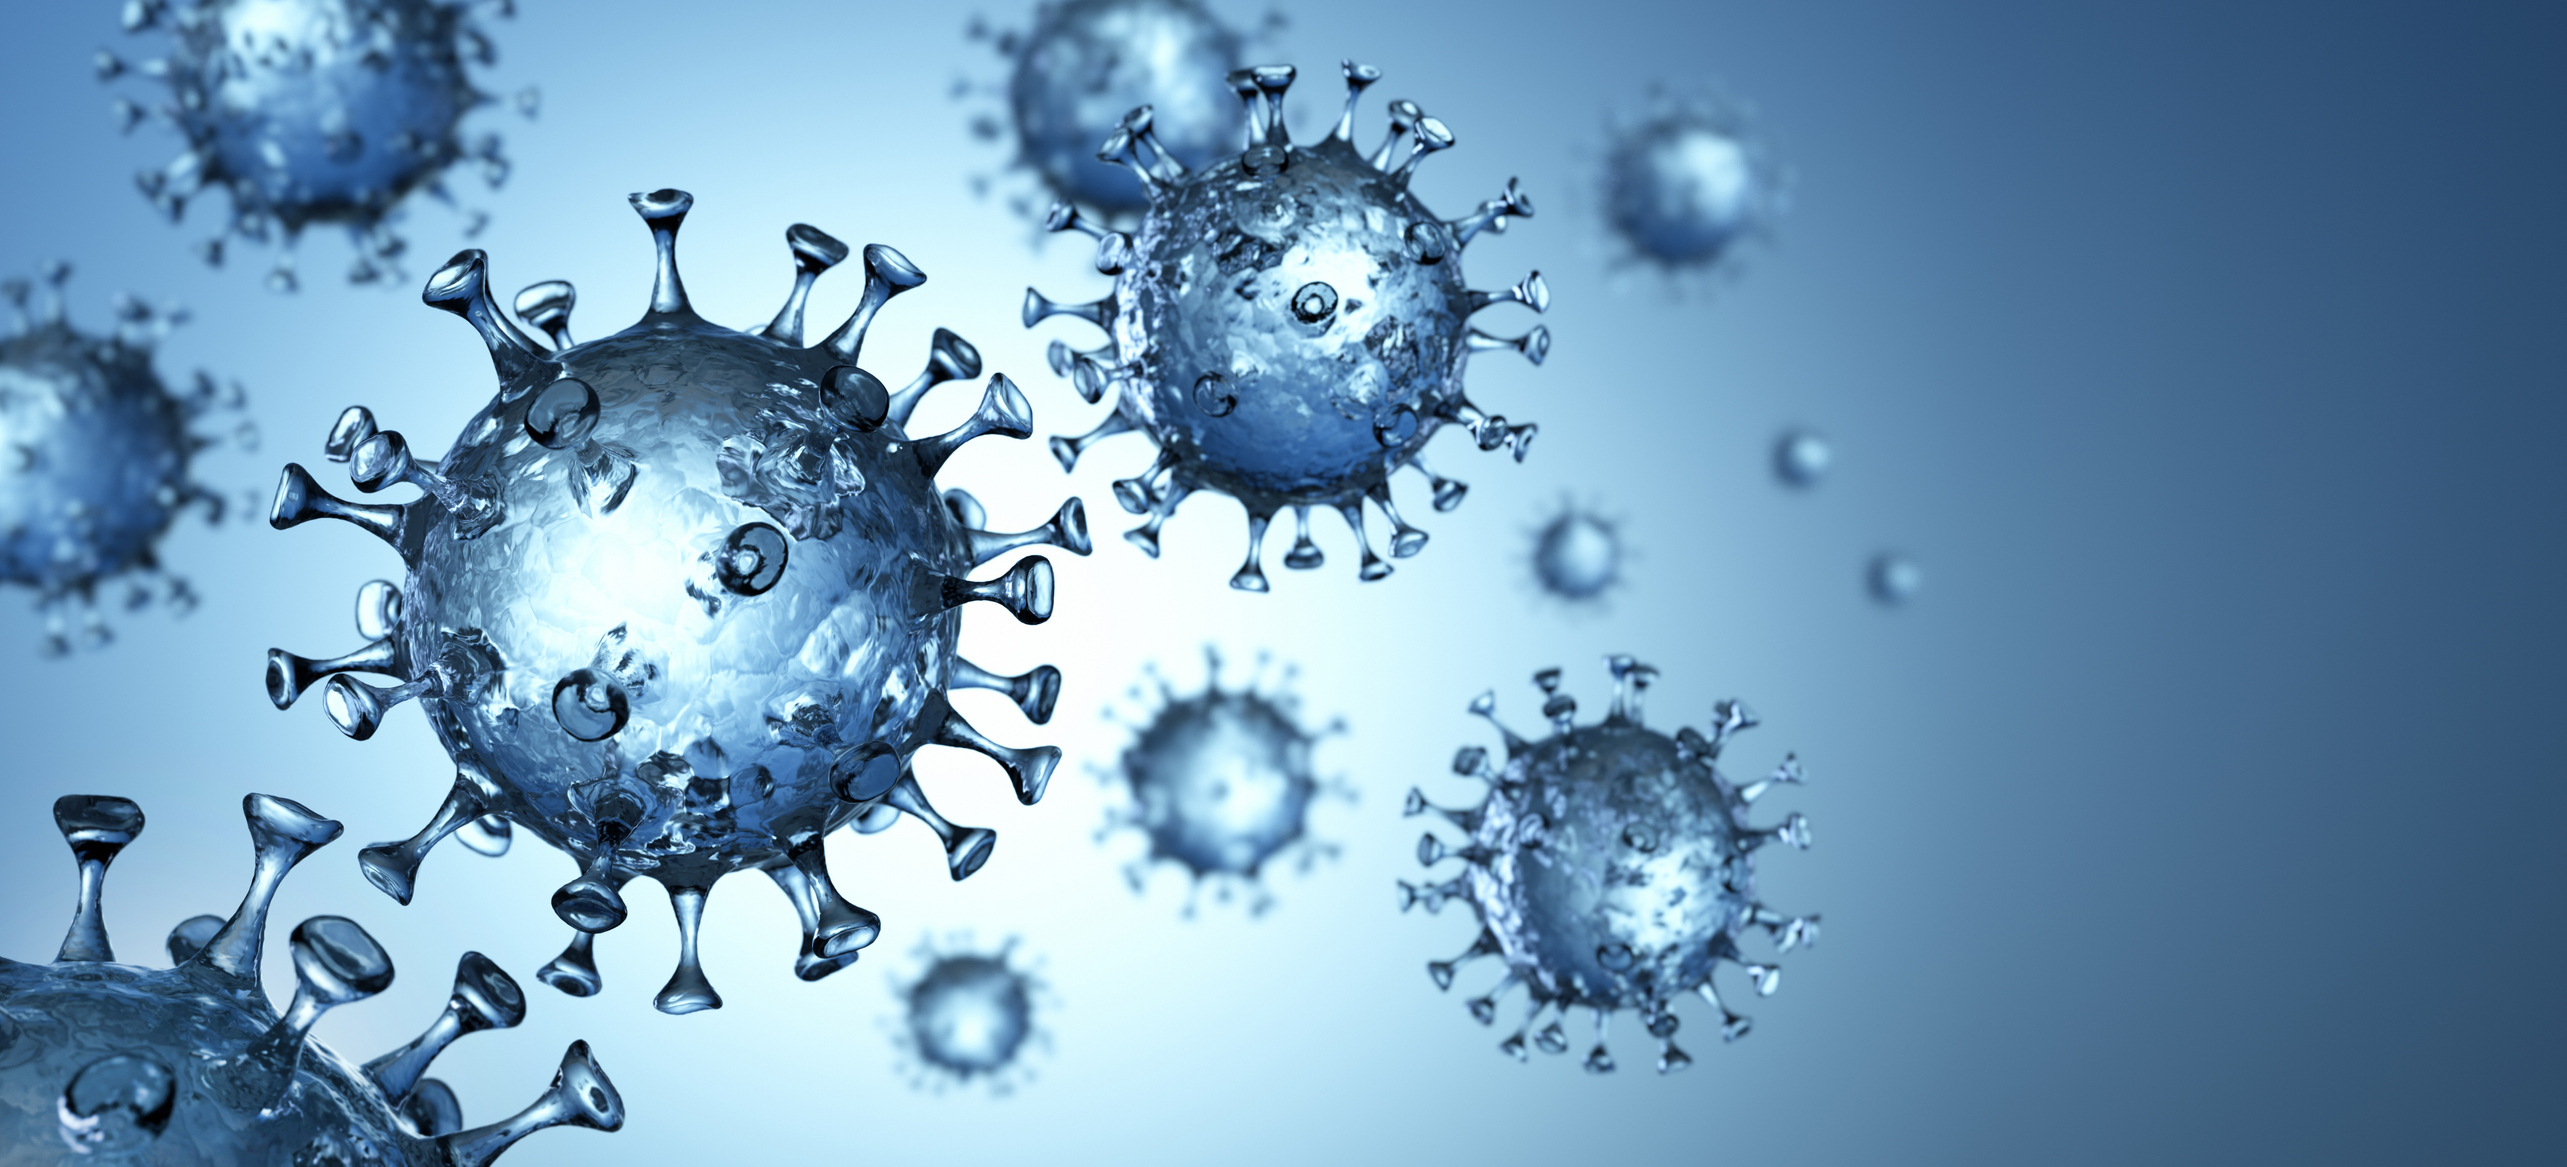 Detailed image of a coronavirus